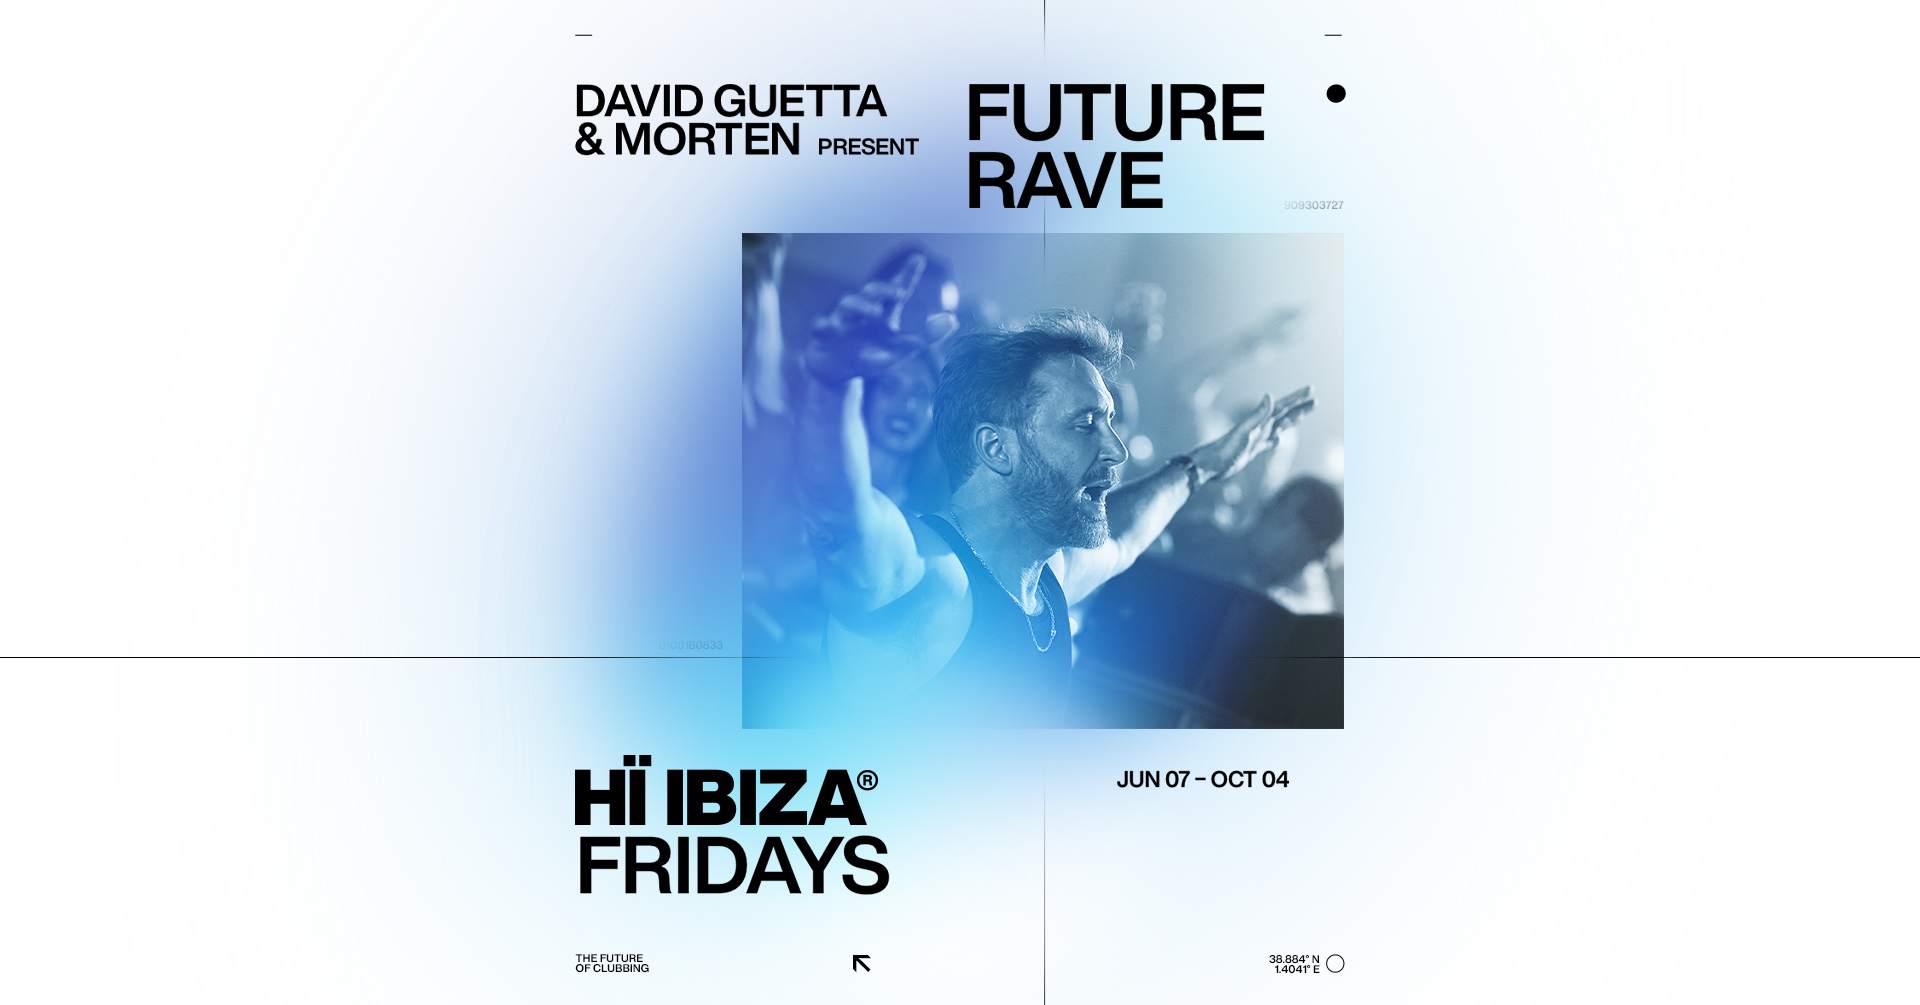 David Guetta & Morten present Future Rave - Página frontal